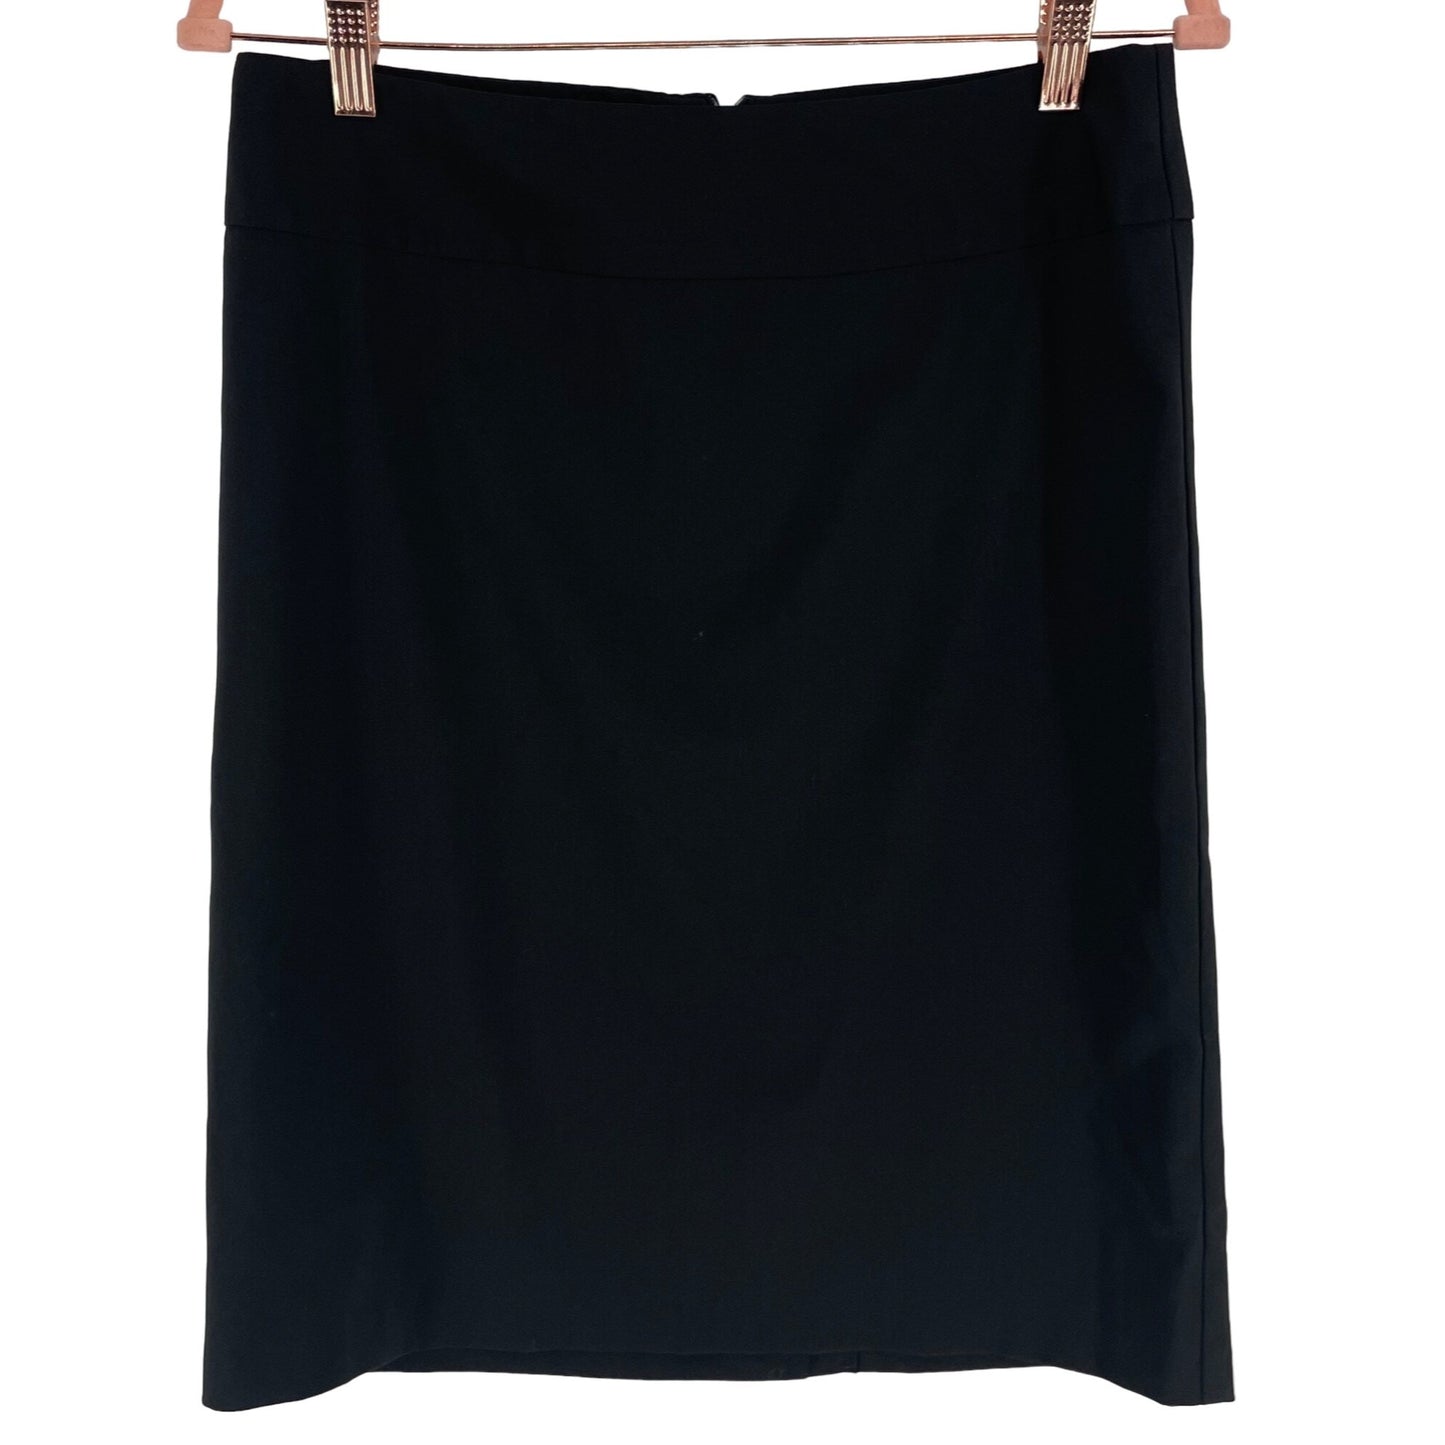 United Colors Of Benetton Women's Size 42 Black Pencil Skirt